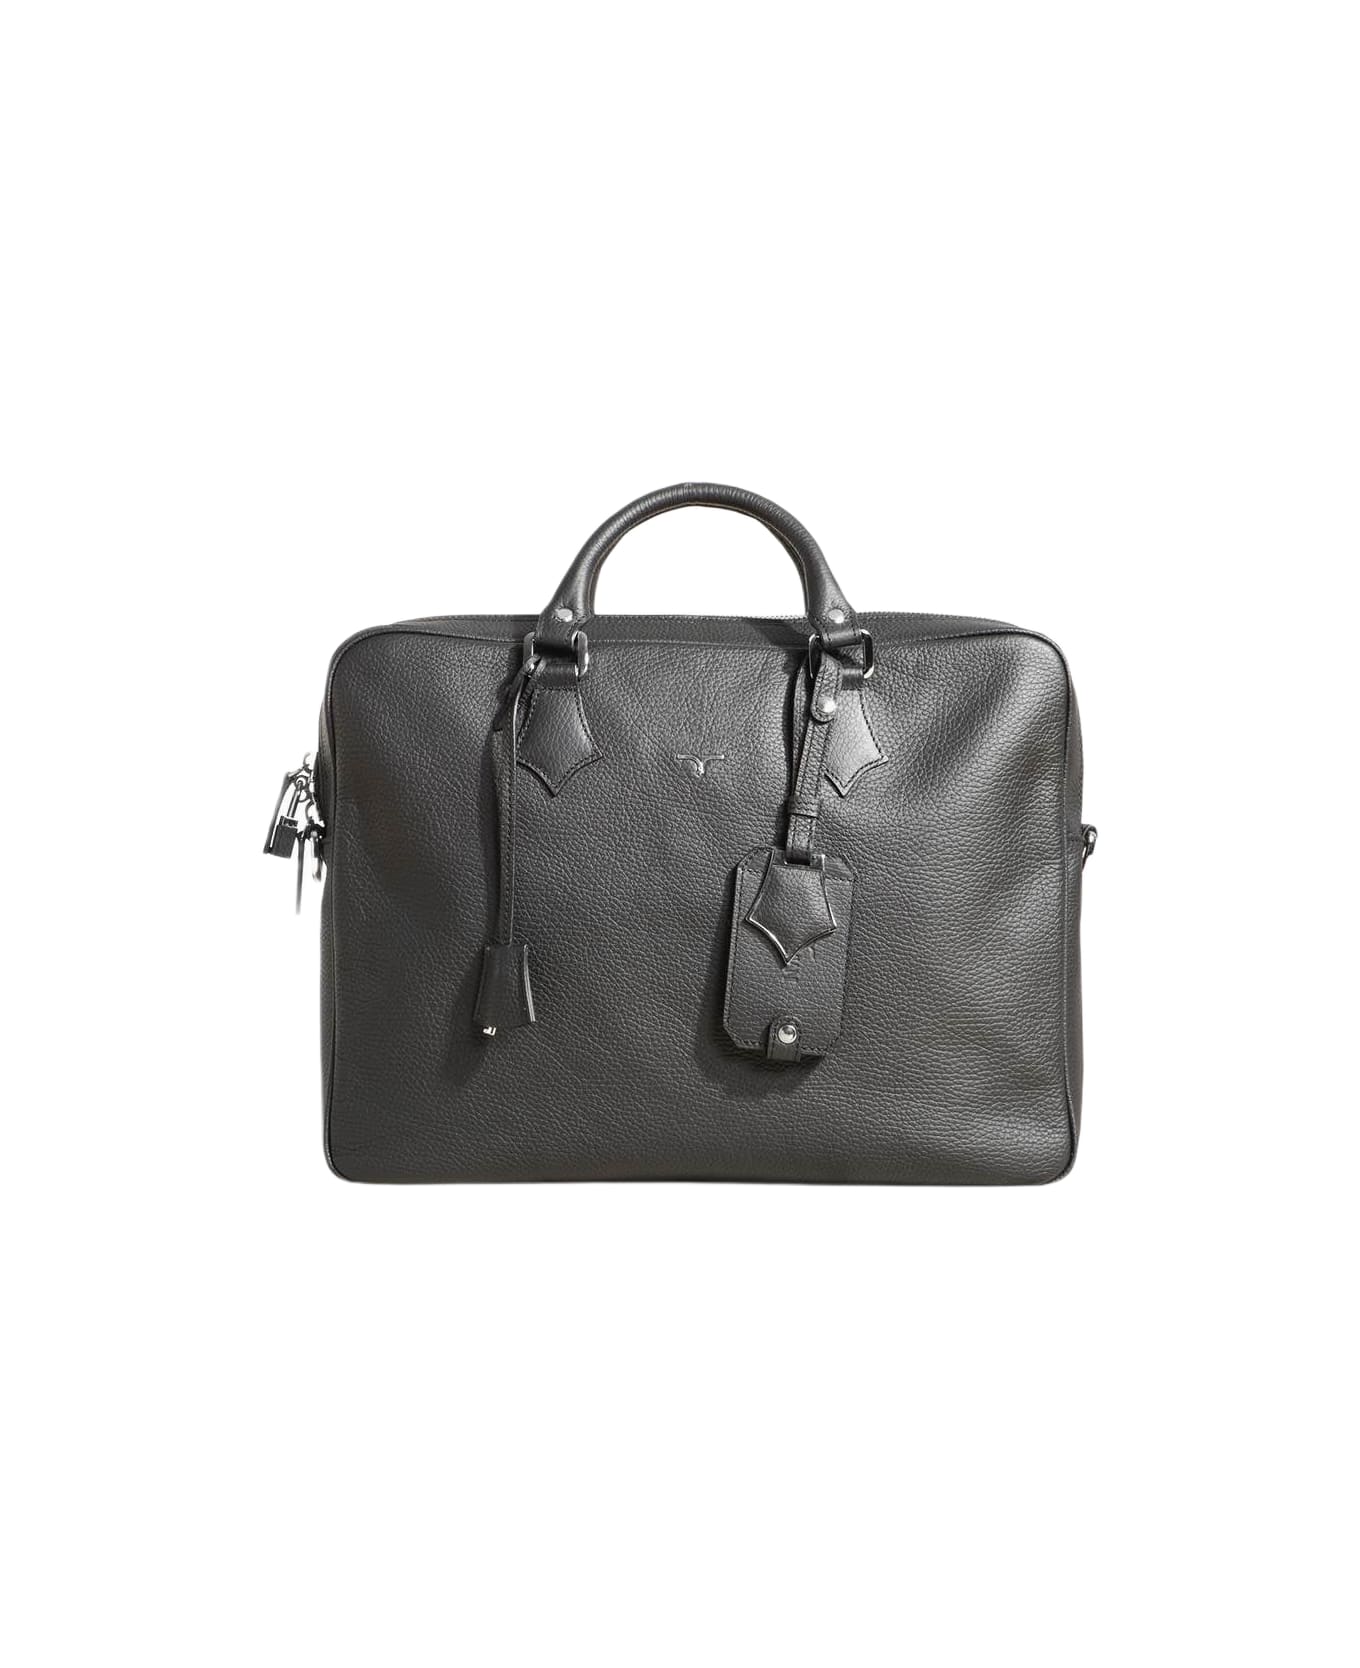 Larusmiani Briefcase 'piazza Affari' Luggage - Black